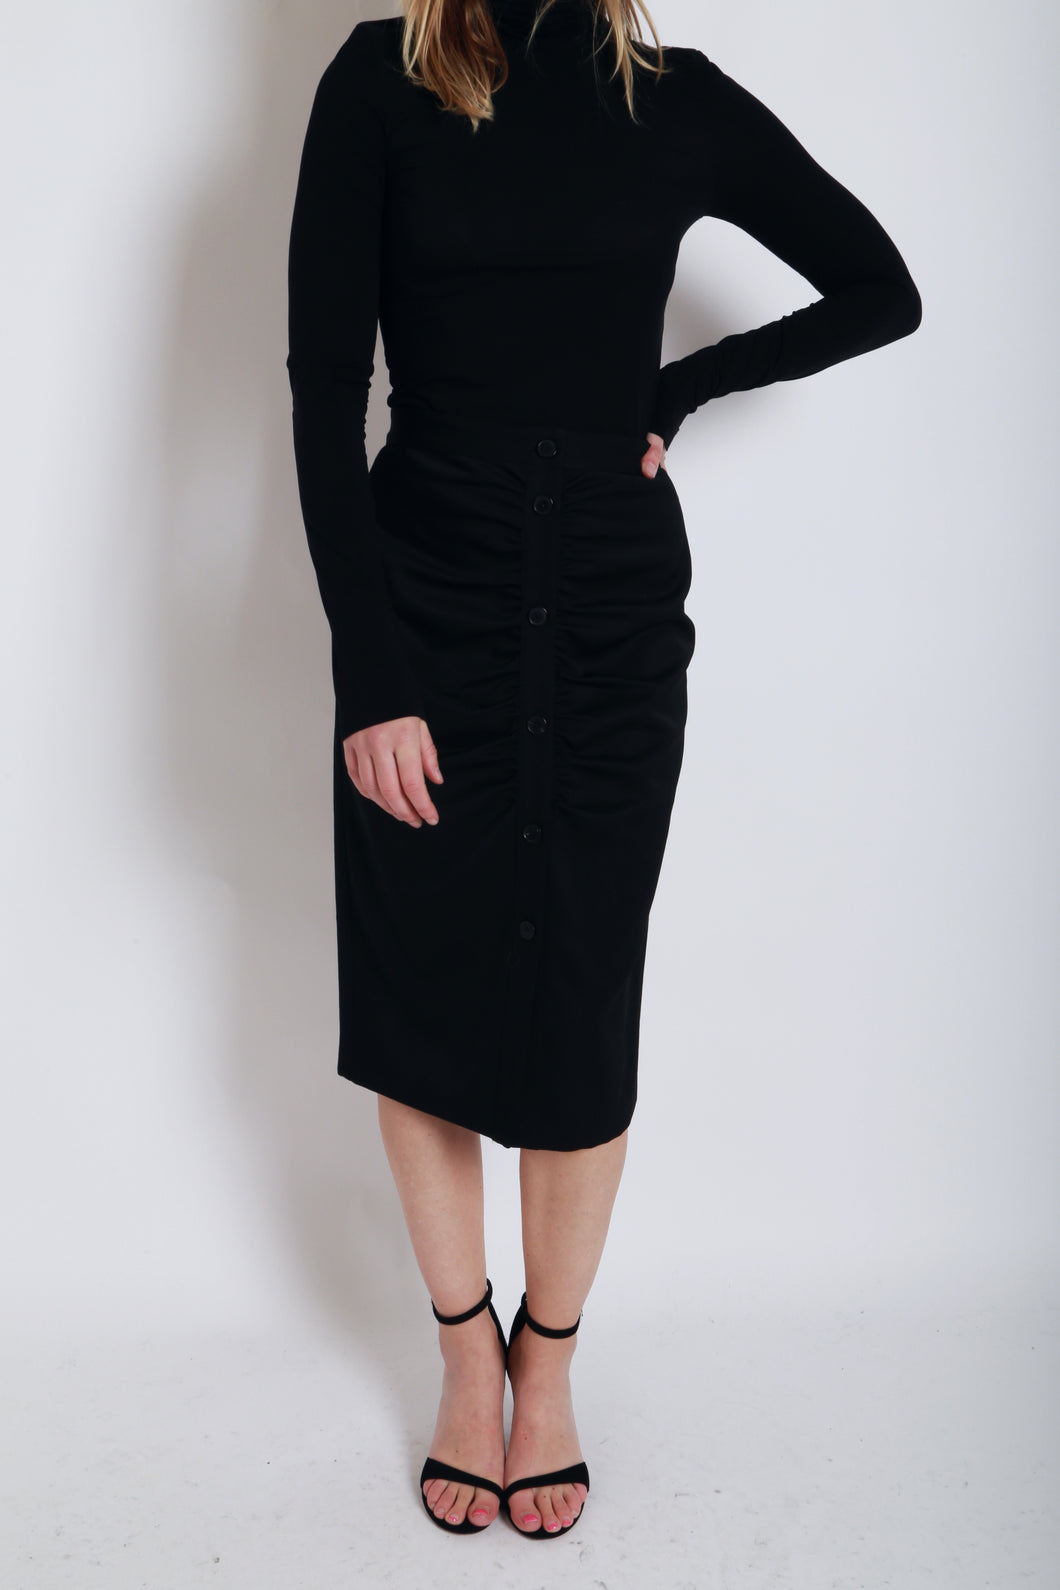 Ellesmere Skirt in Black